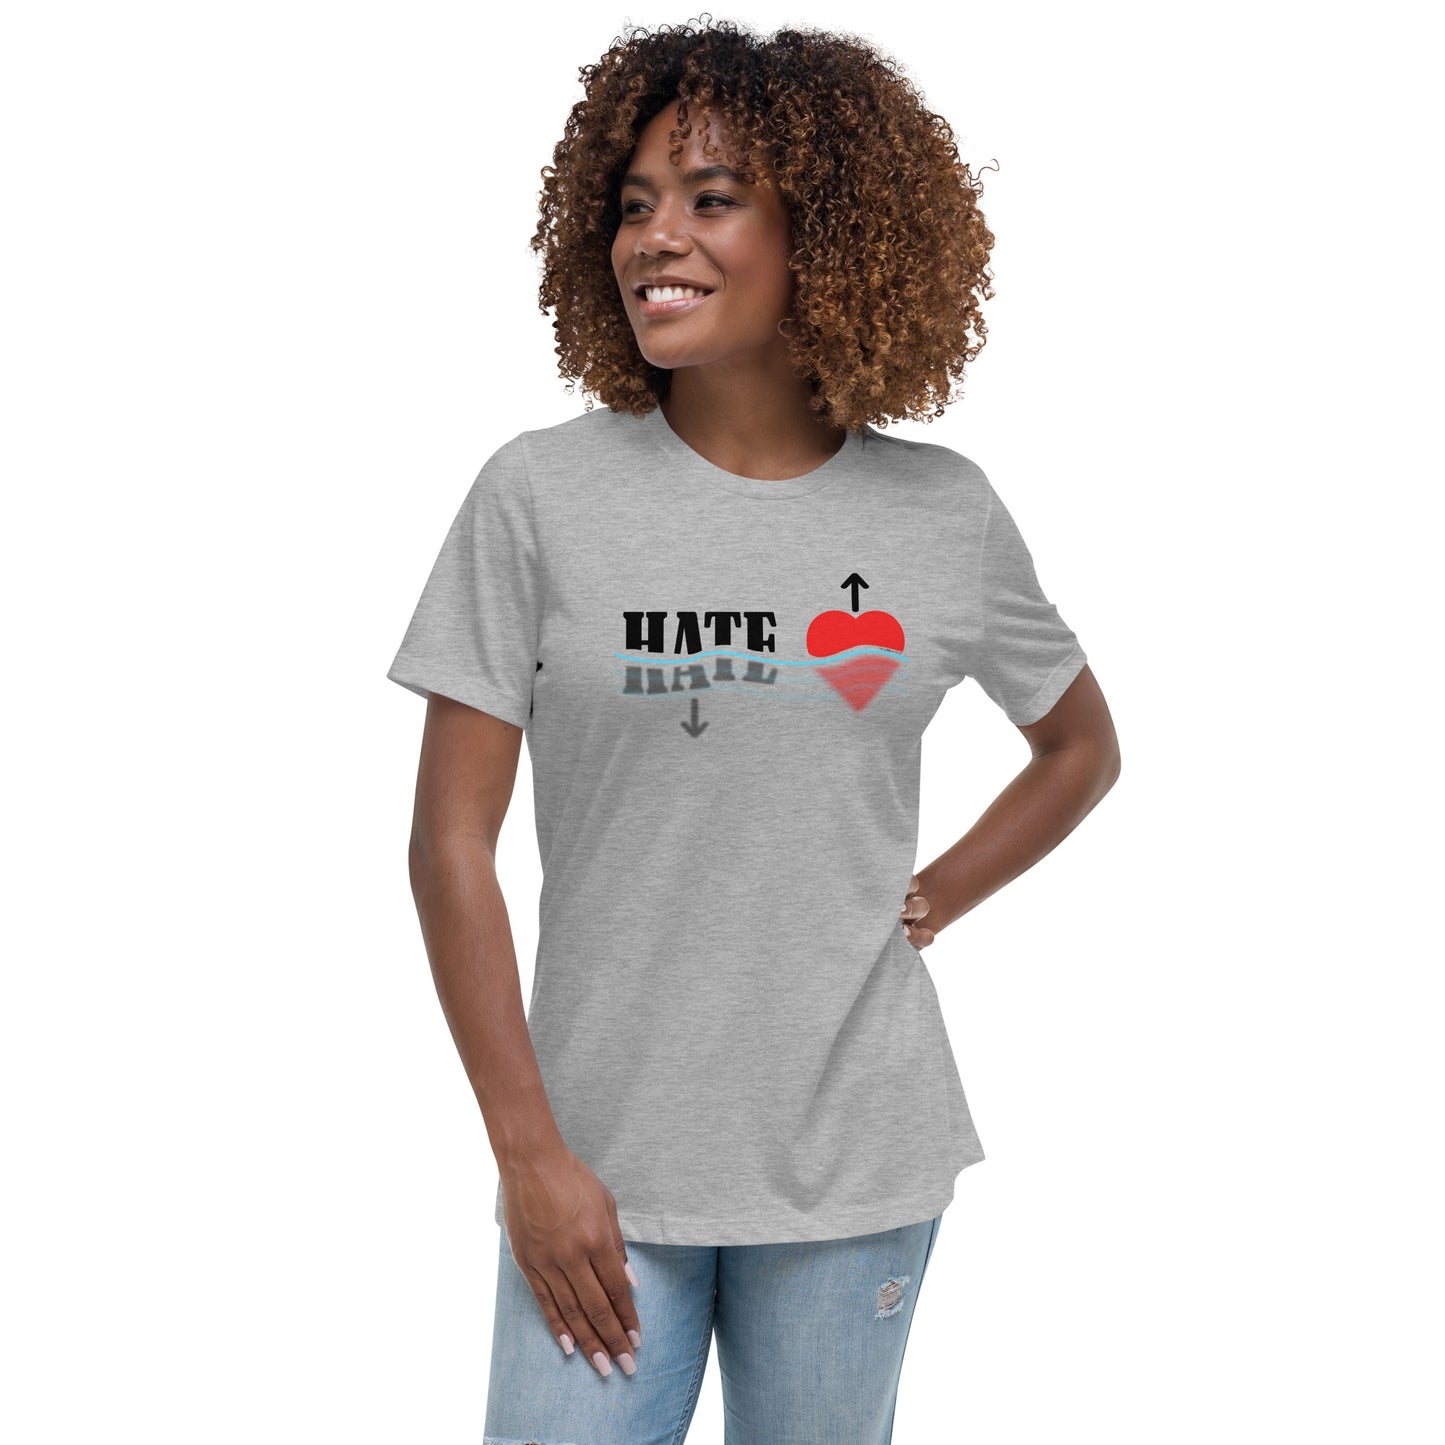 Sink Hate Raise Love Women's Relaxed T-Shirt